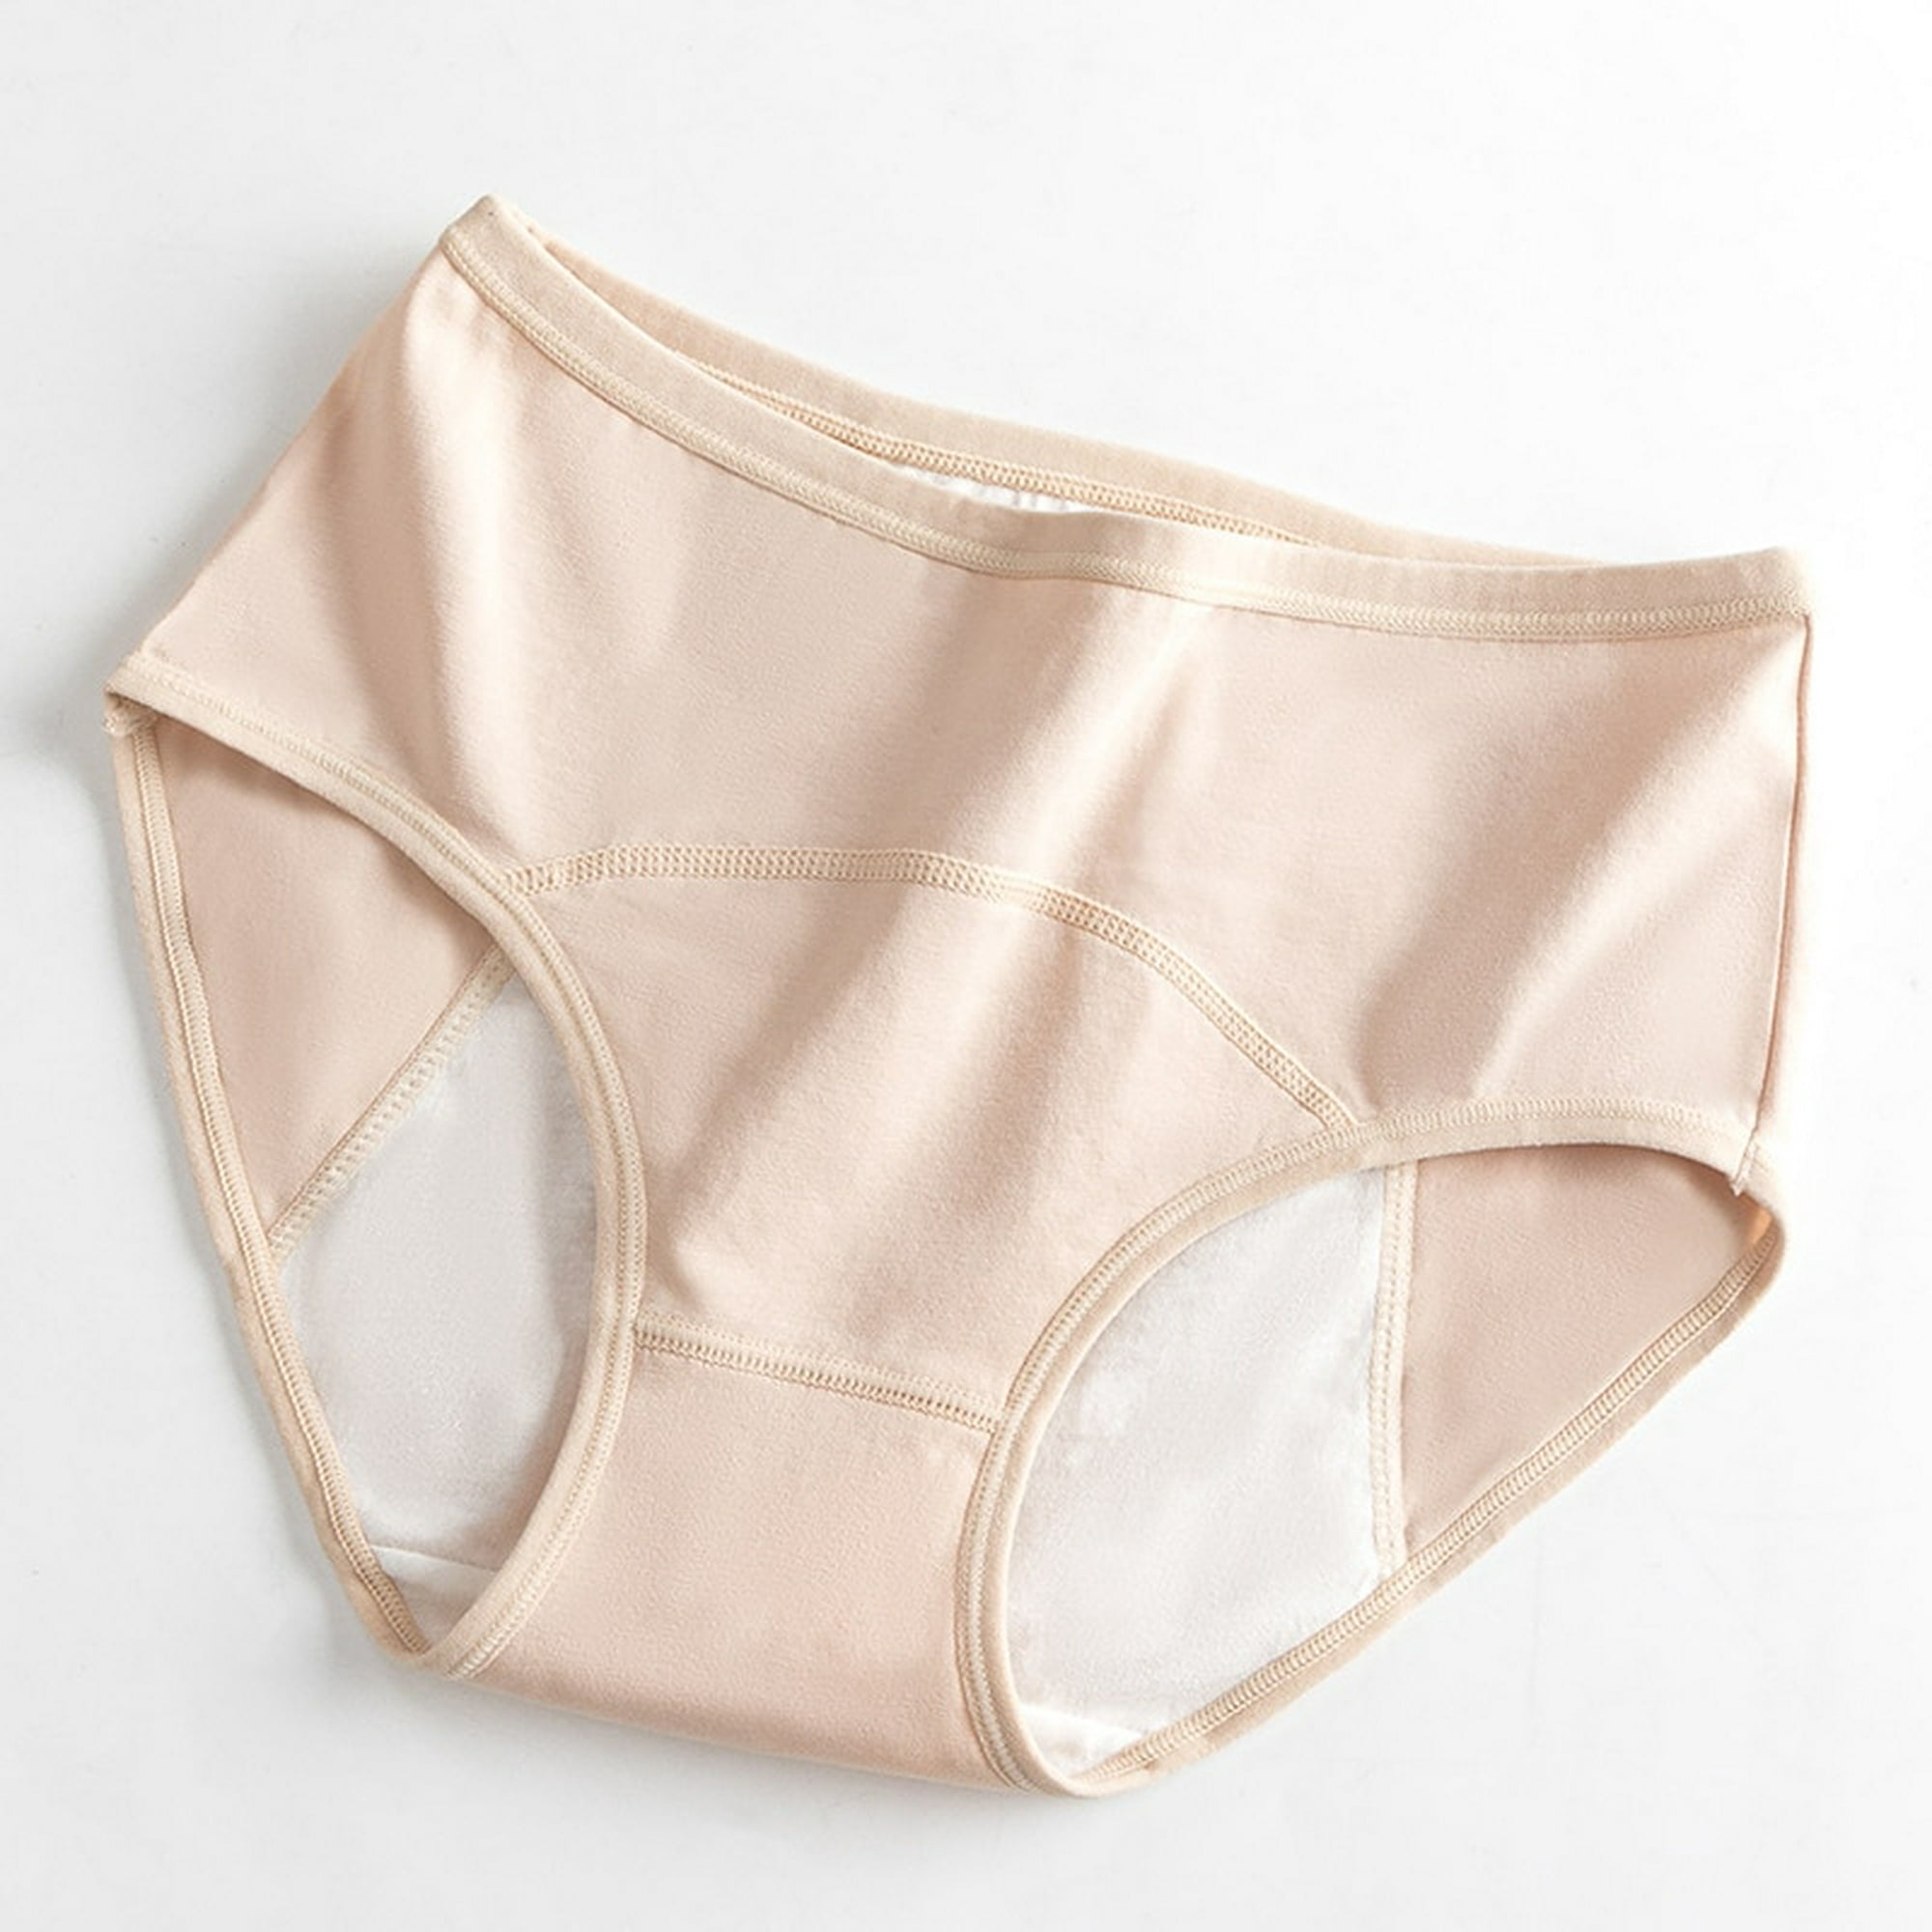 Calzon Menstrual Lavable Panties Algodon Flujo Abundante Culotte